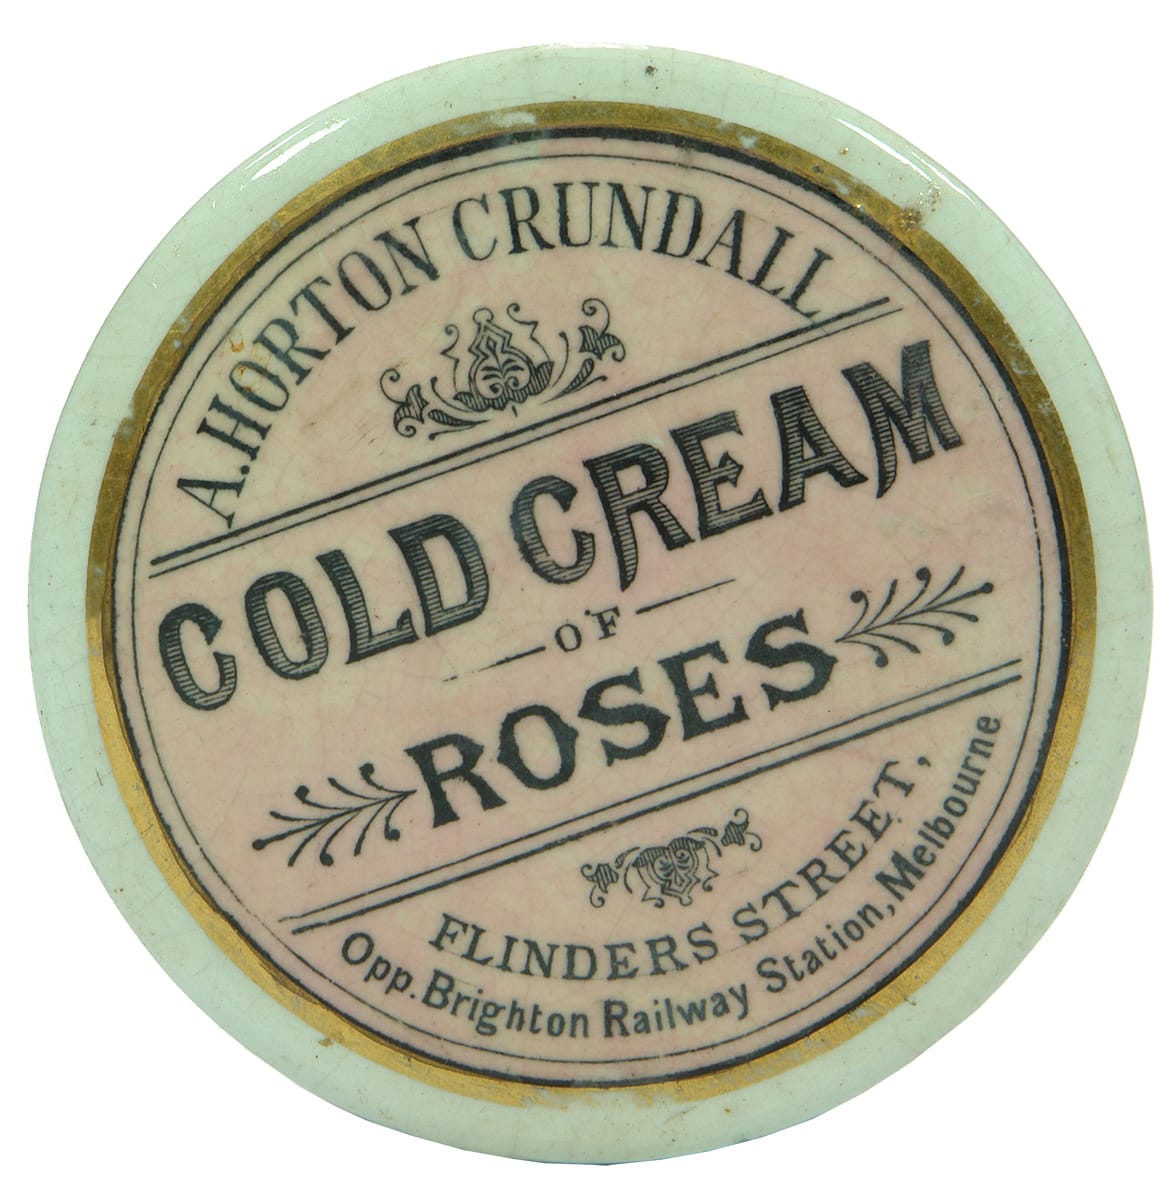 Horton Crundall Flinders Melbourne Cold Cream Pot Lid